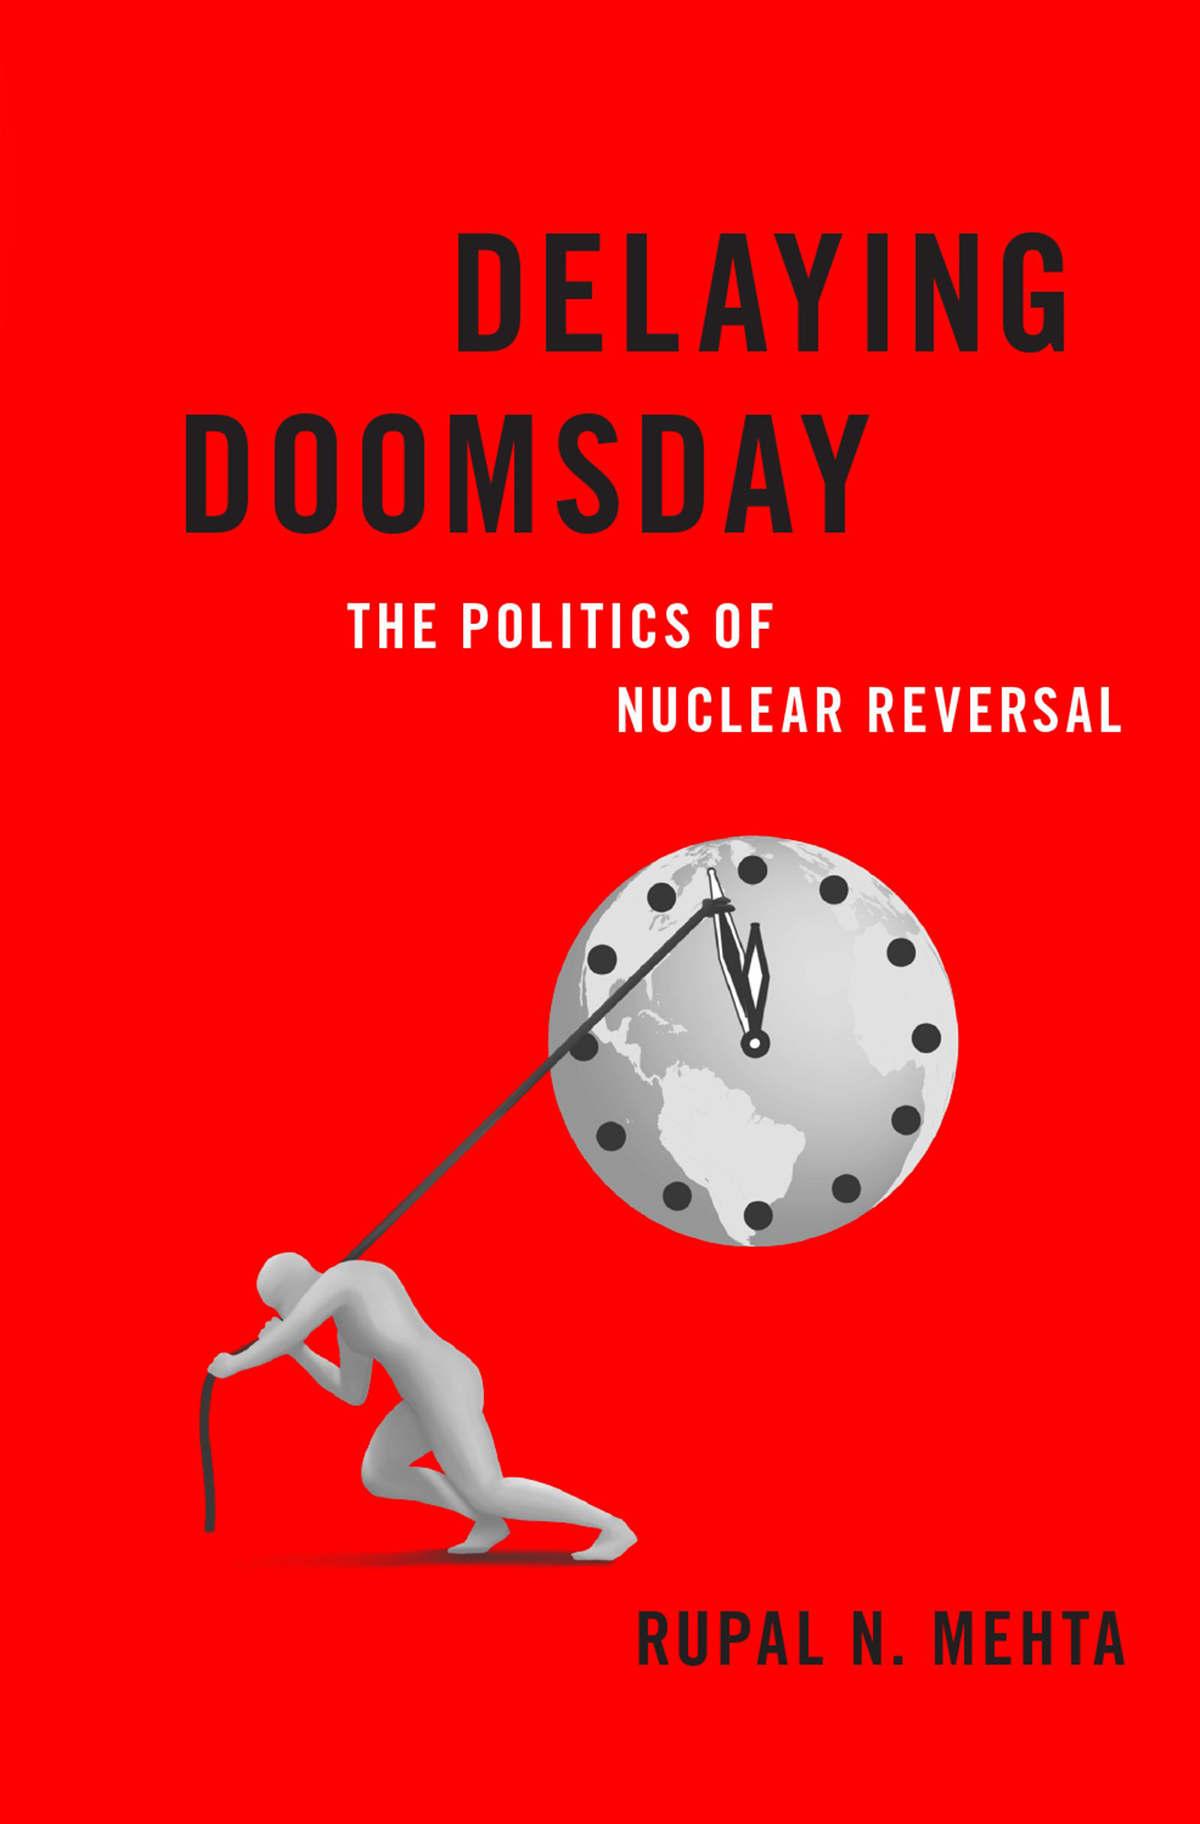 Politics of nuclear reversal